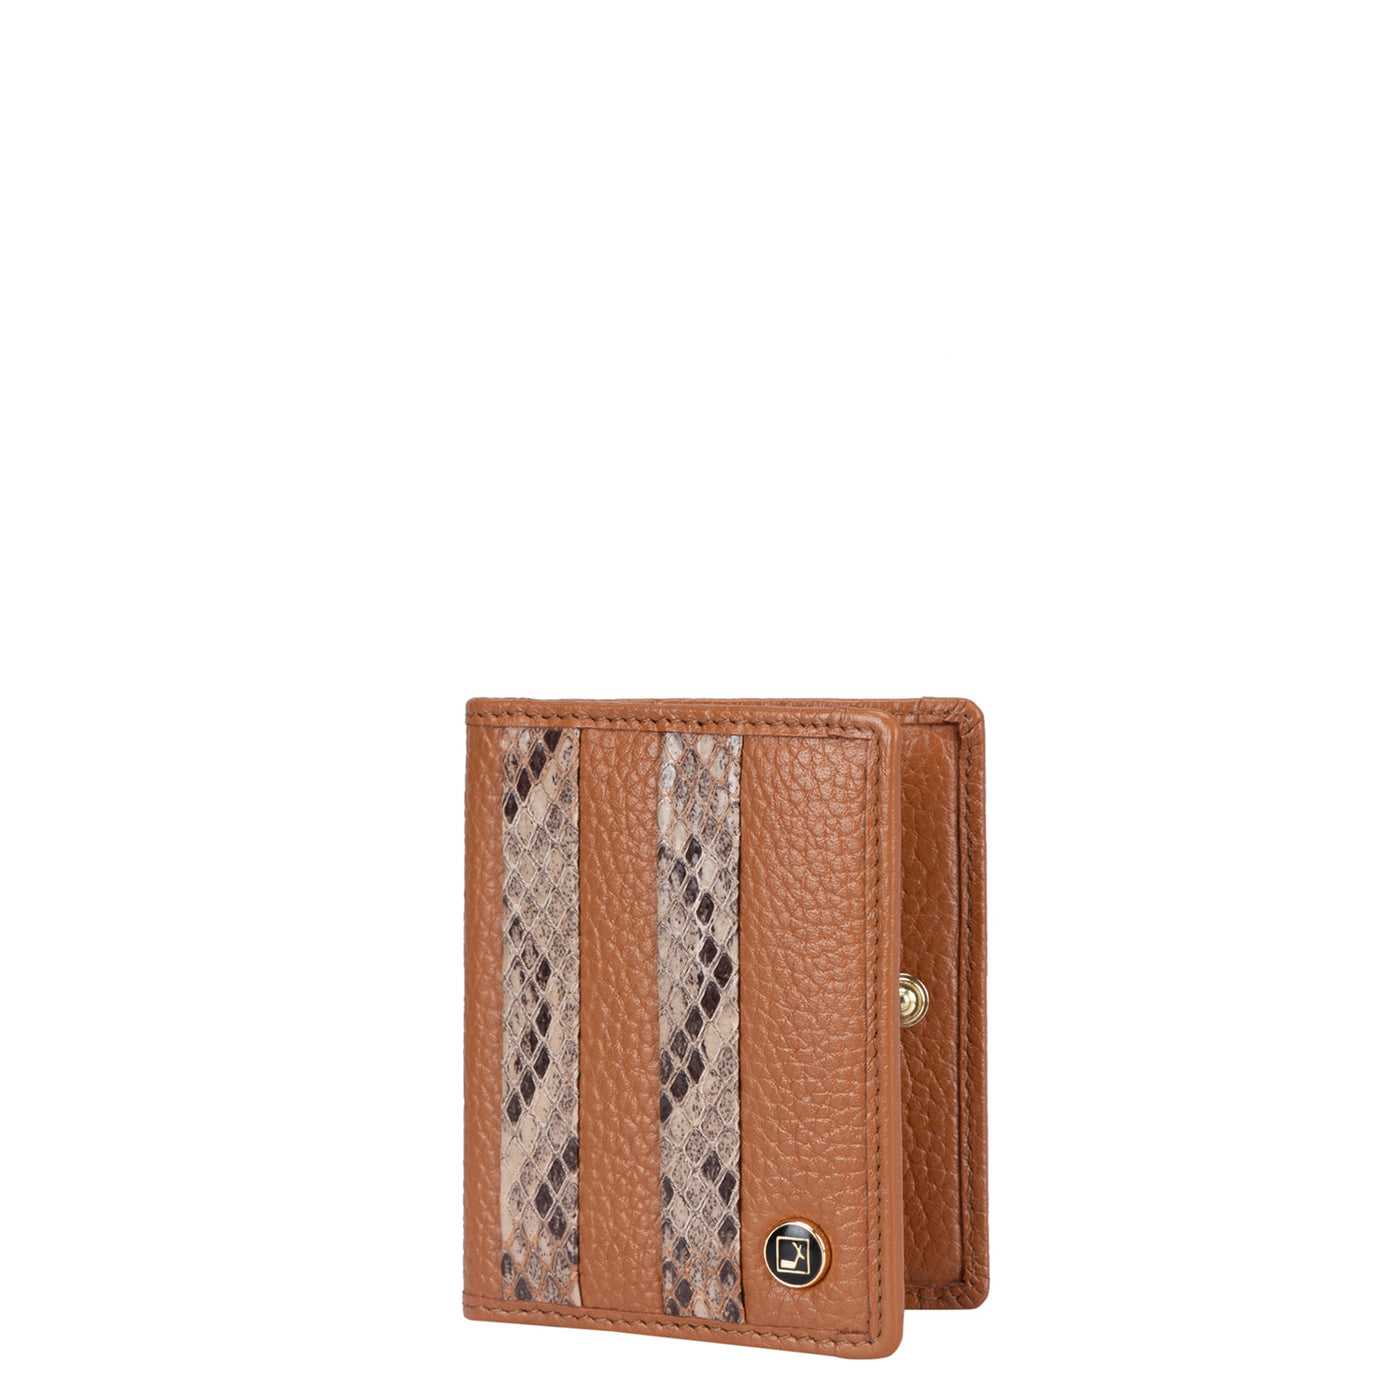 Wax Snake Leather Card Case - Caramel